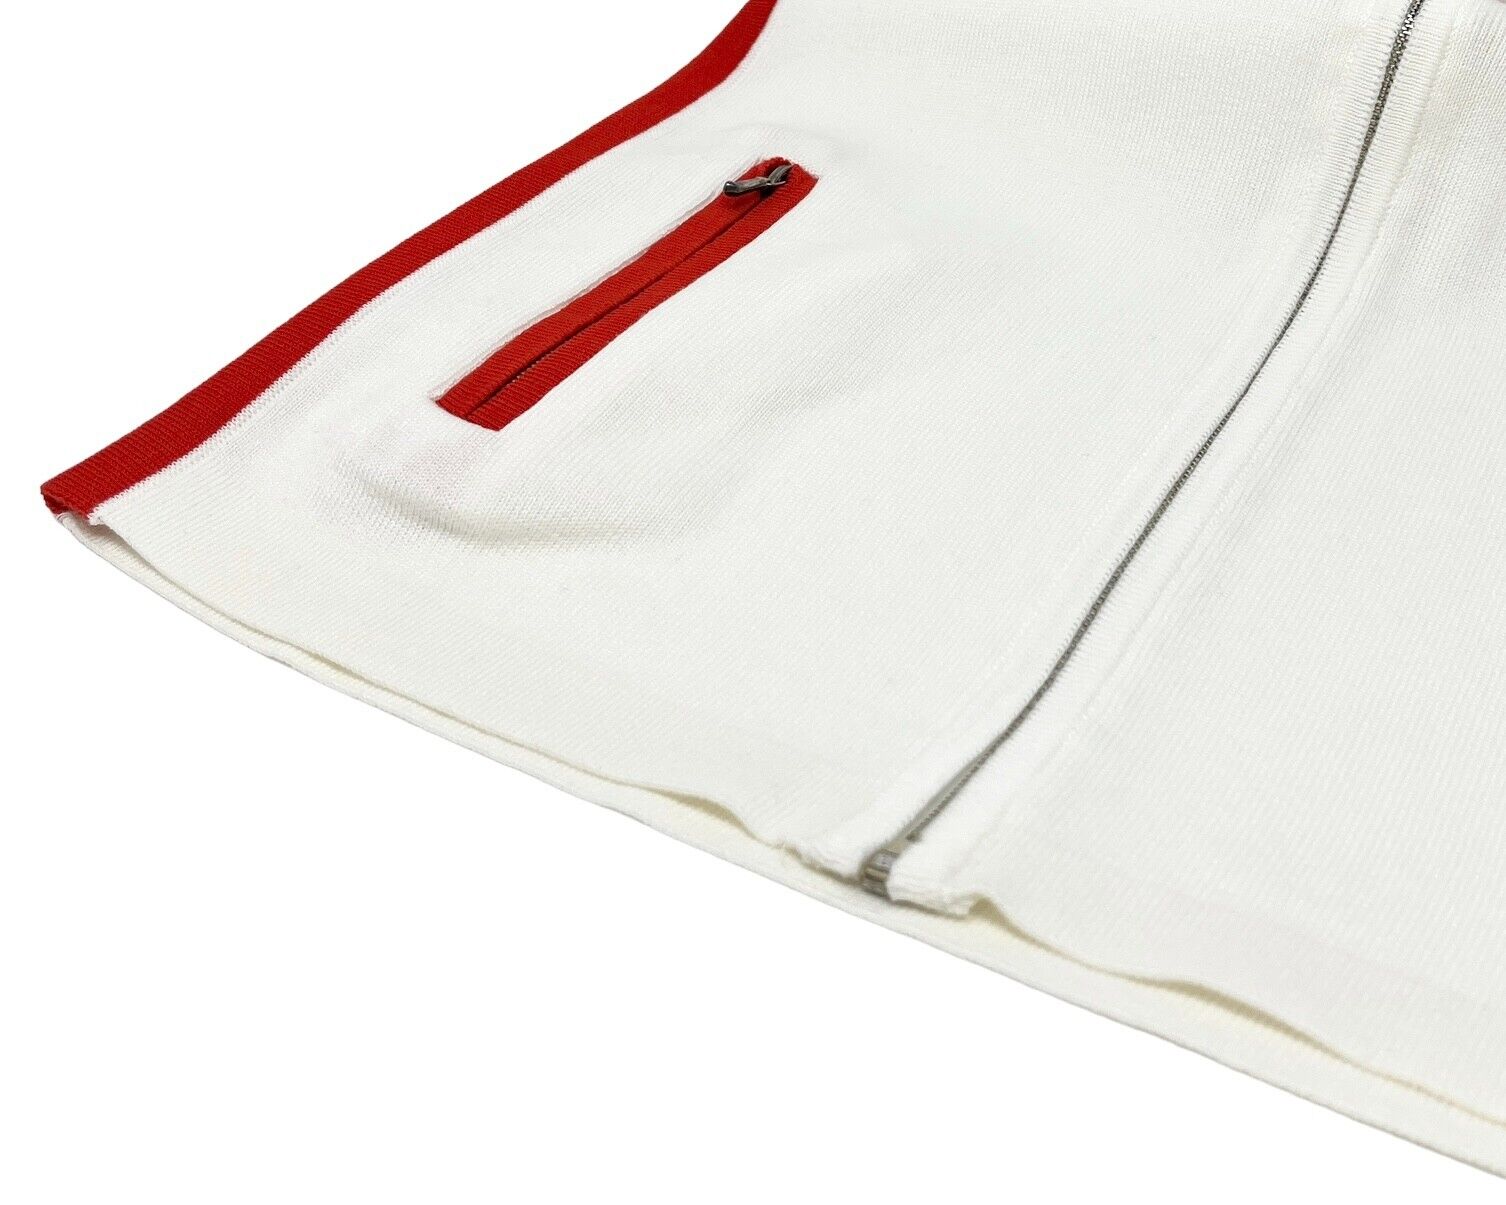 CHANEL Vintage Coco Mark Logo Tank Top Polo Zip White Red Cotton Rank AB